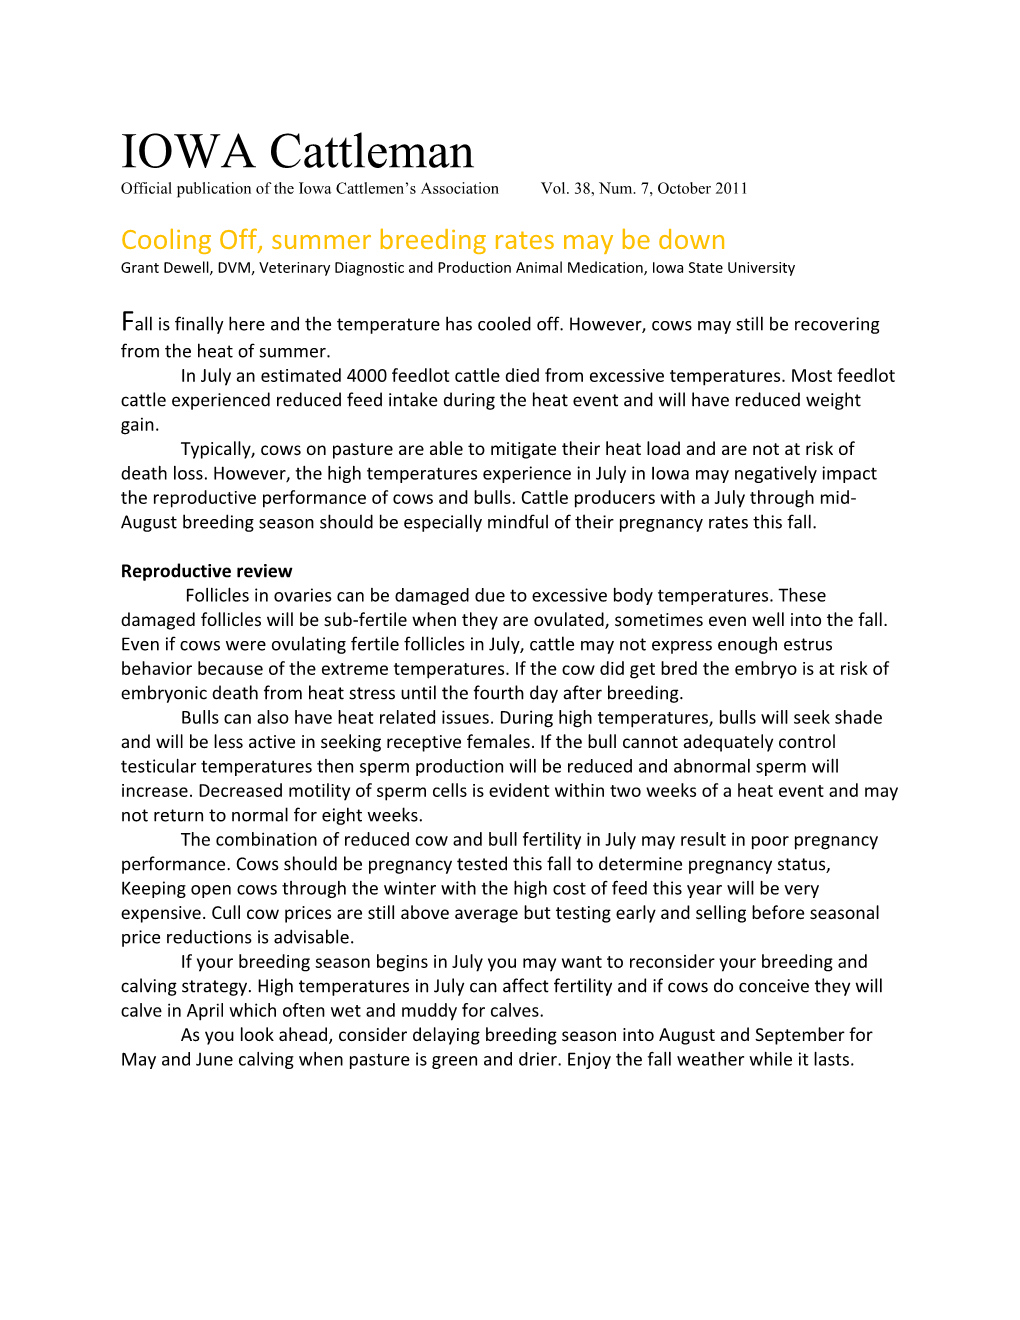 Official Publication of the Iowa Cattlemen S Association Vol. 38, Num. 7, October 2011